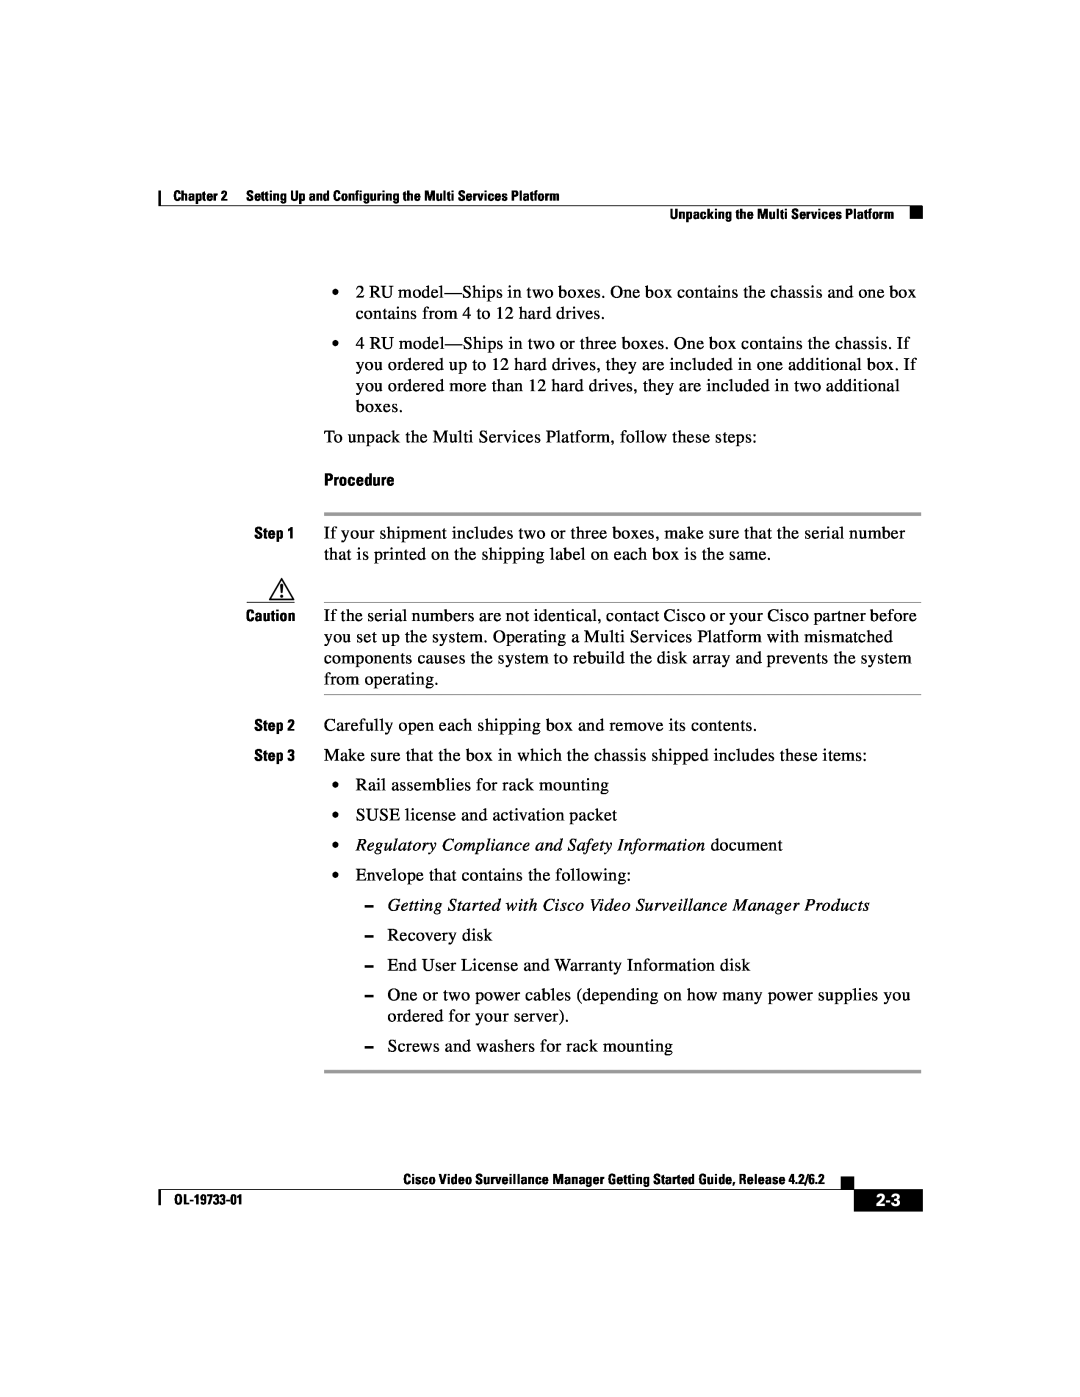 Cisco Systems Release 4.2 manual Procedure 